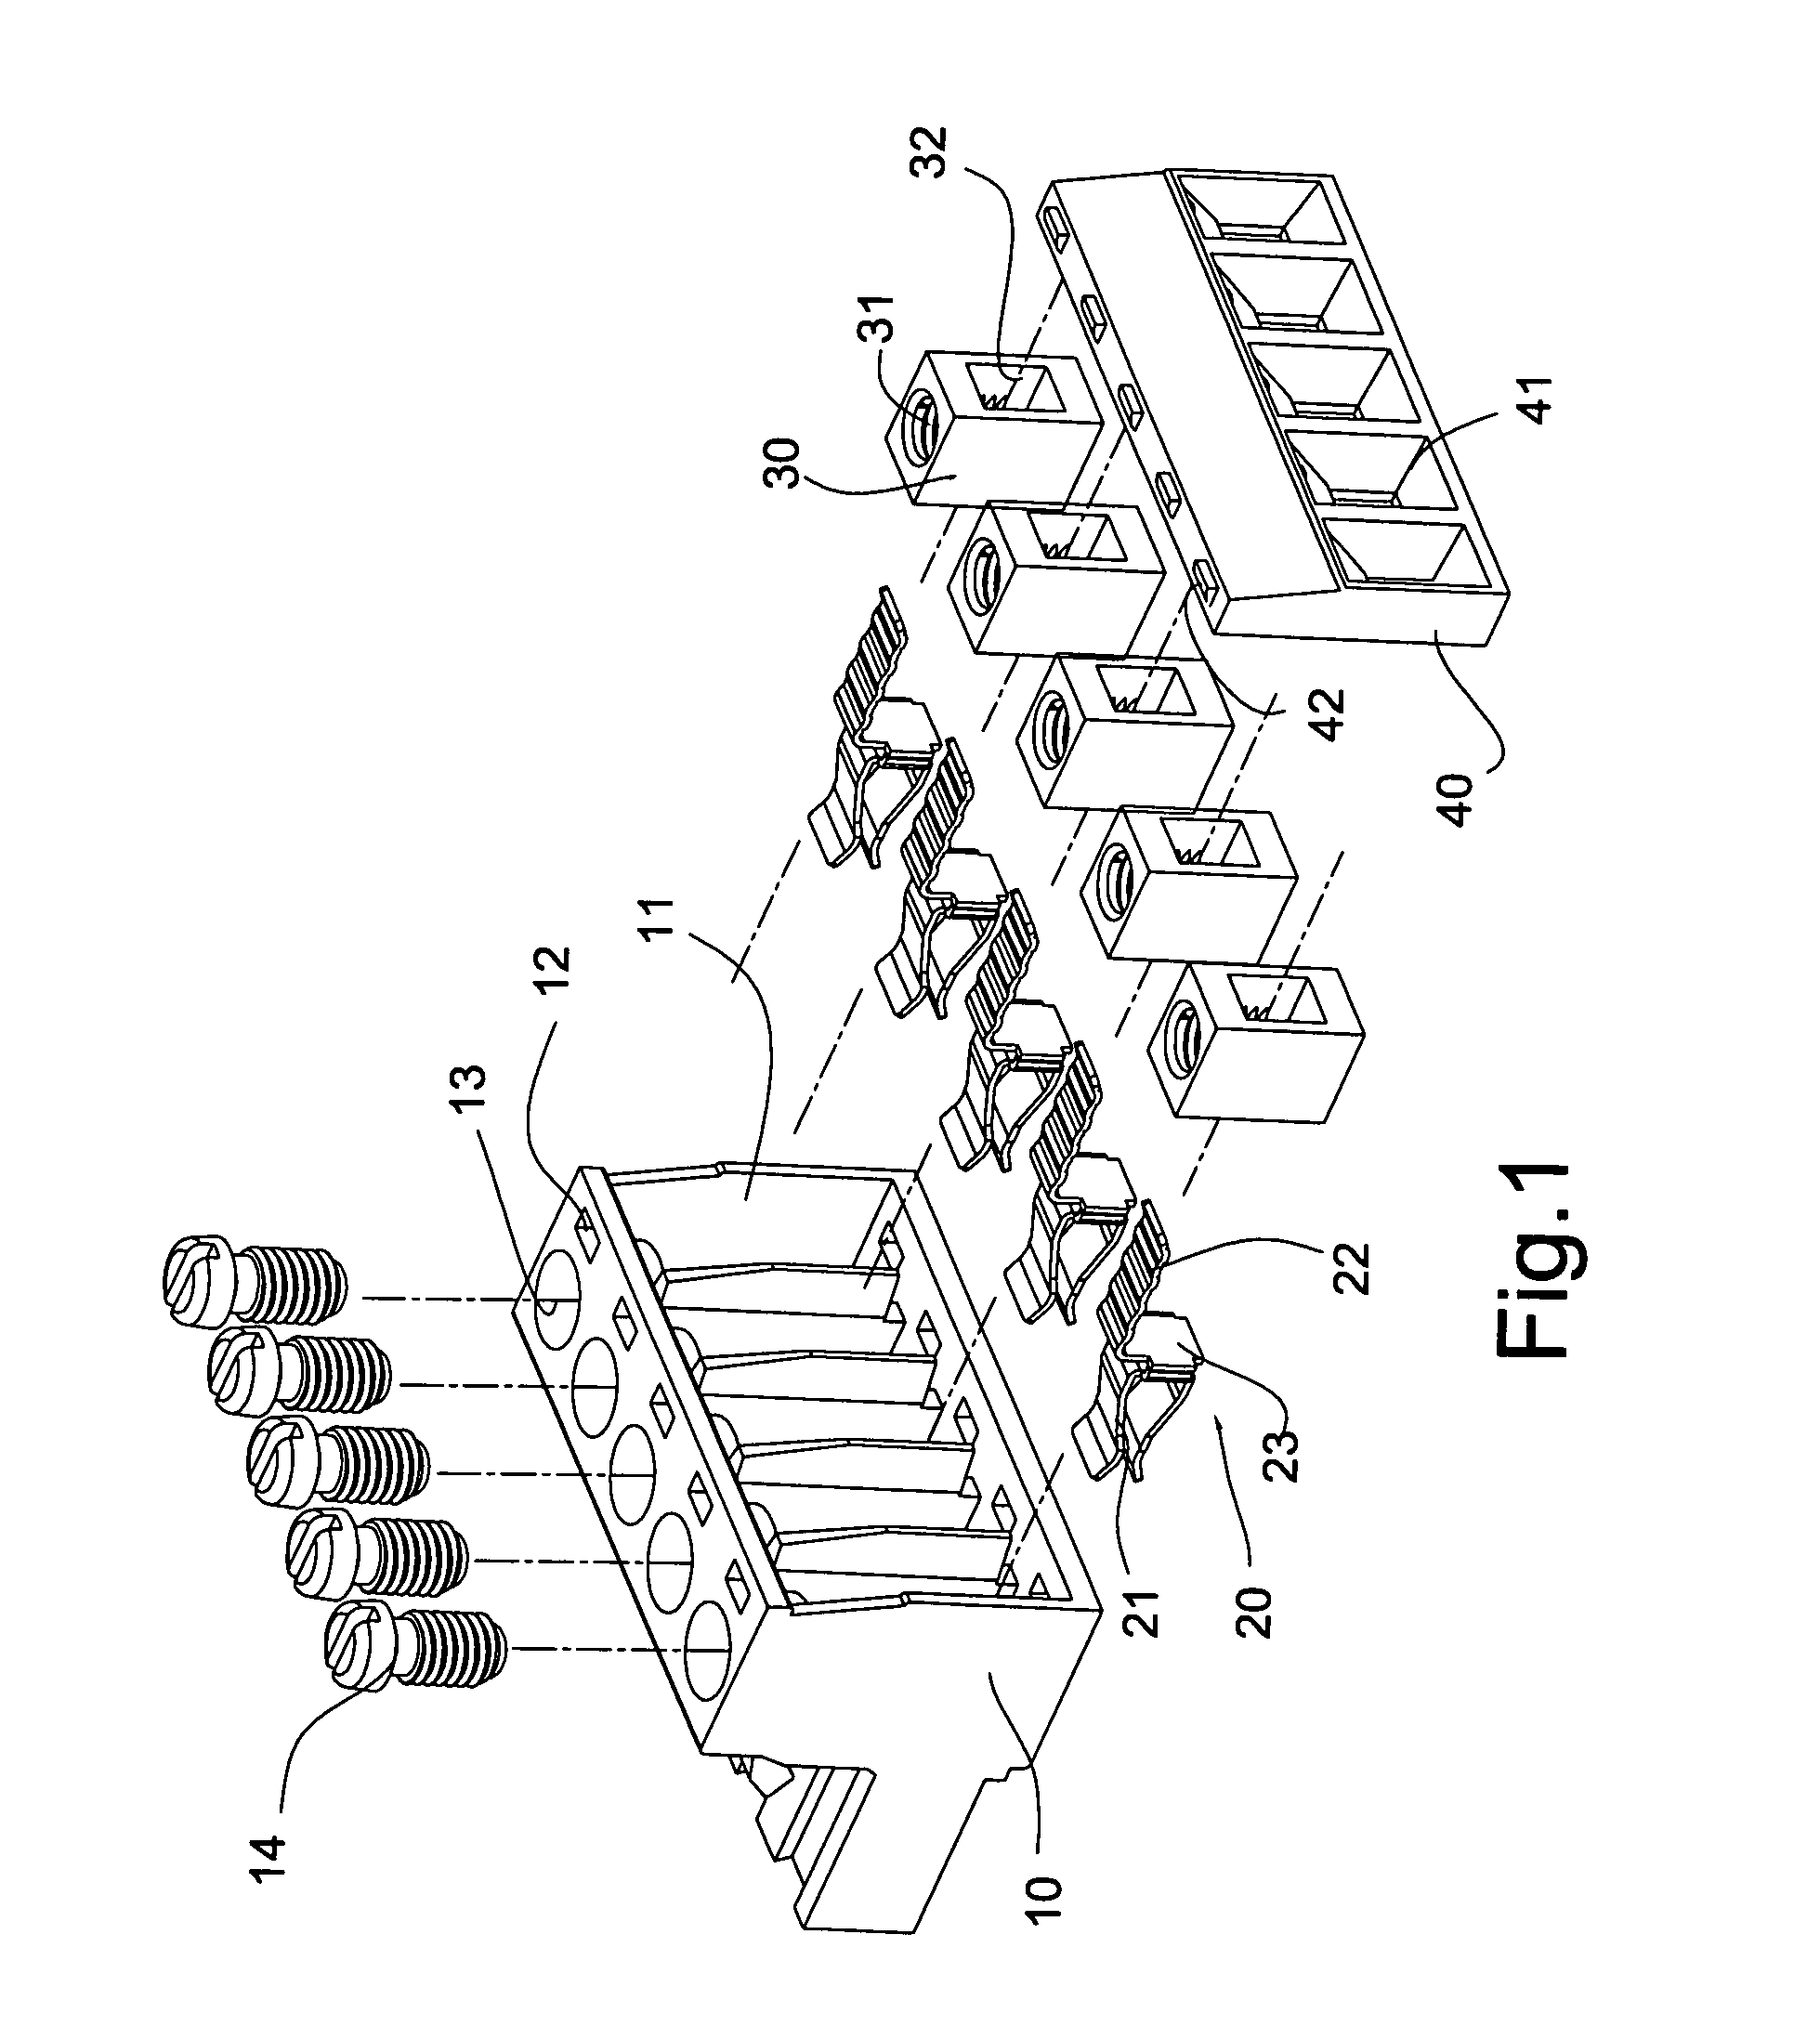 Terminal table fastener